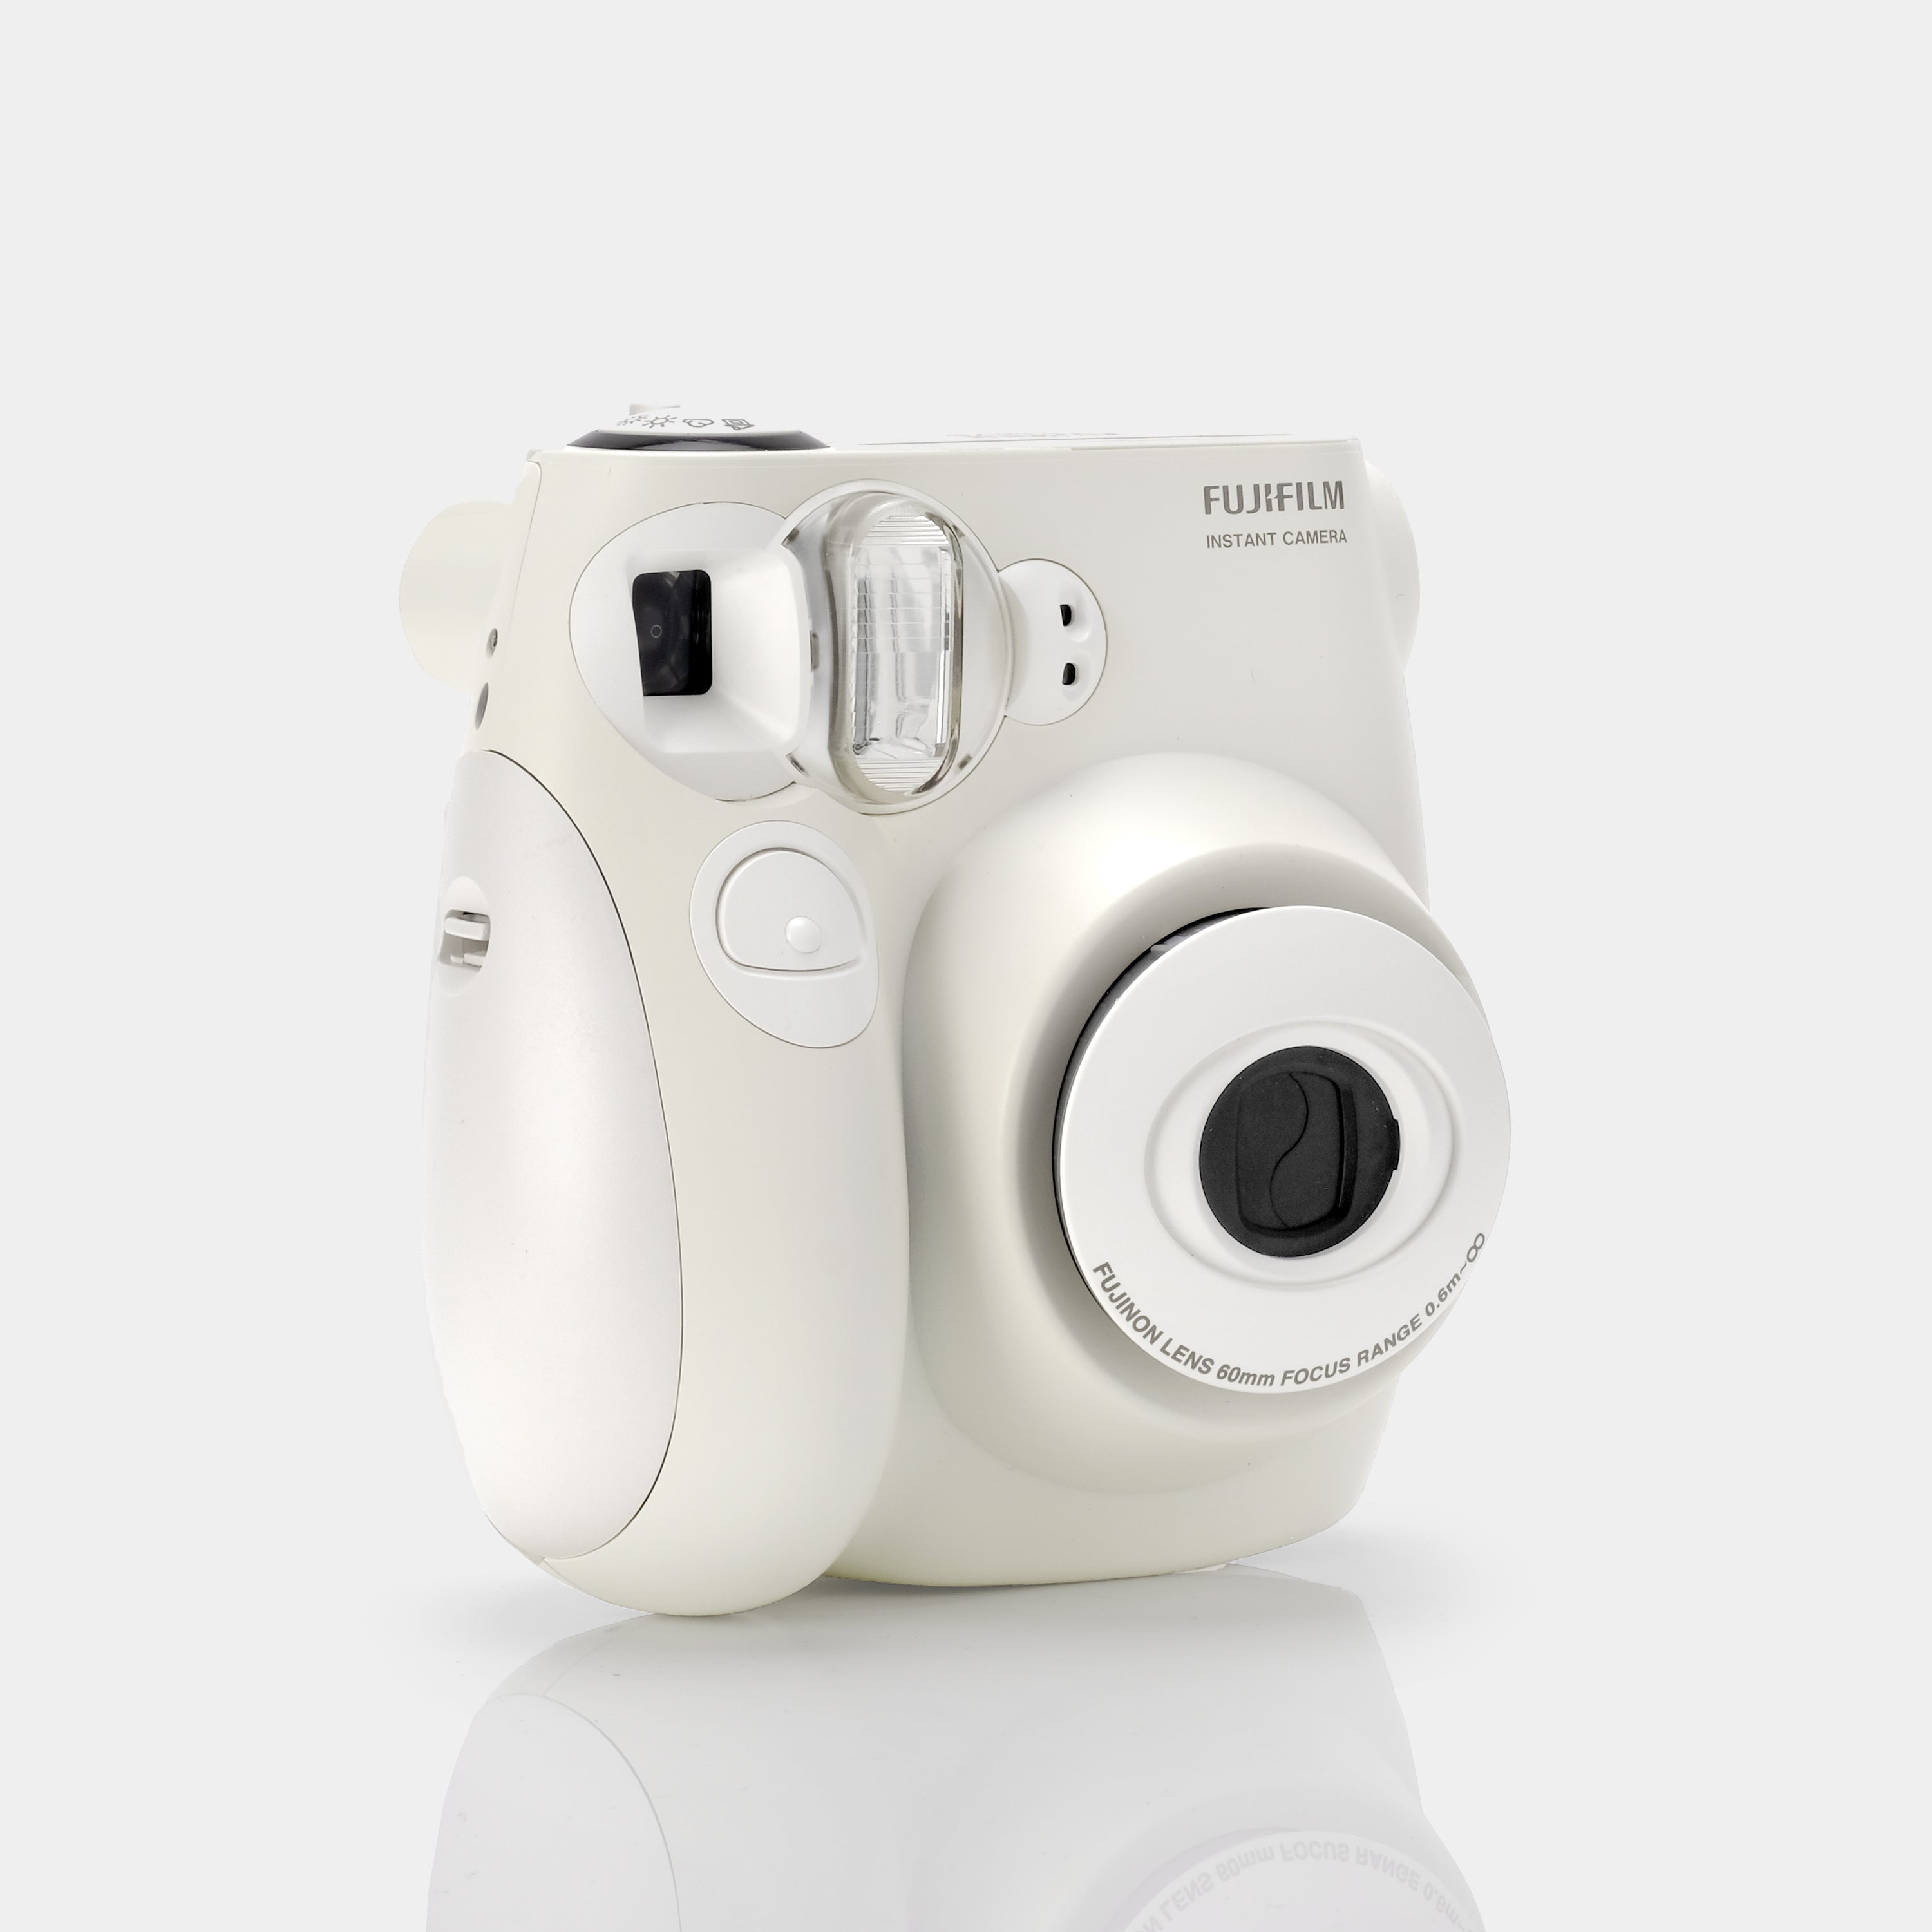 Fujifilm Instax Mini 7S White Instant Film Camera With Blue Bag - Refurbished